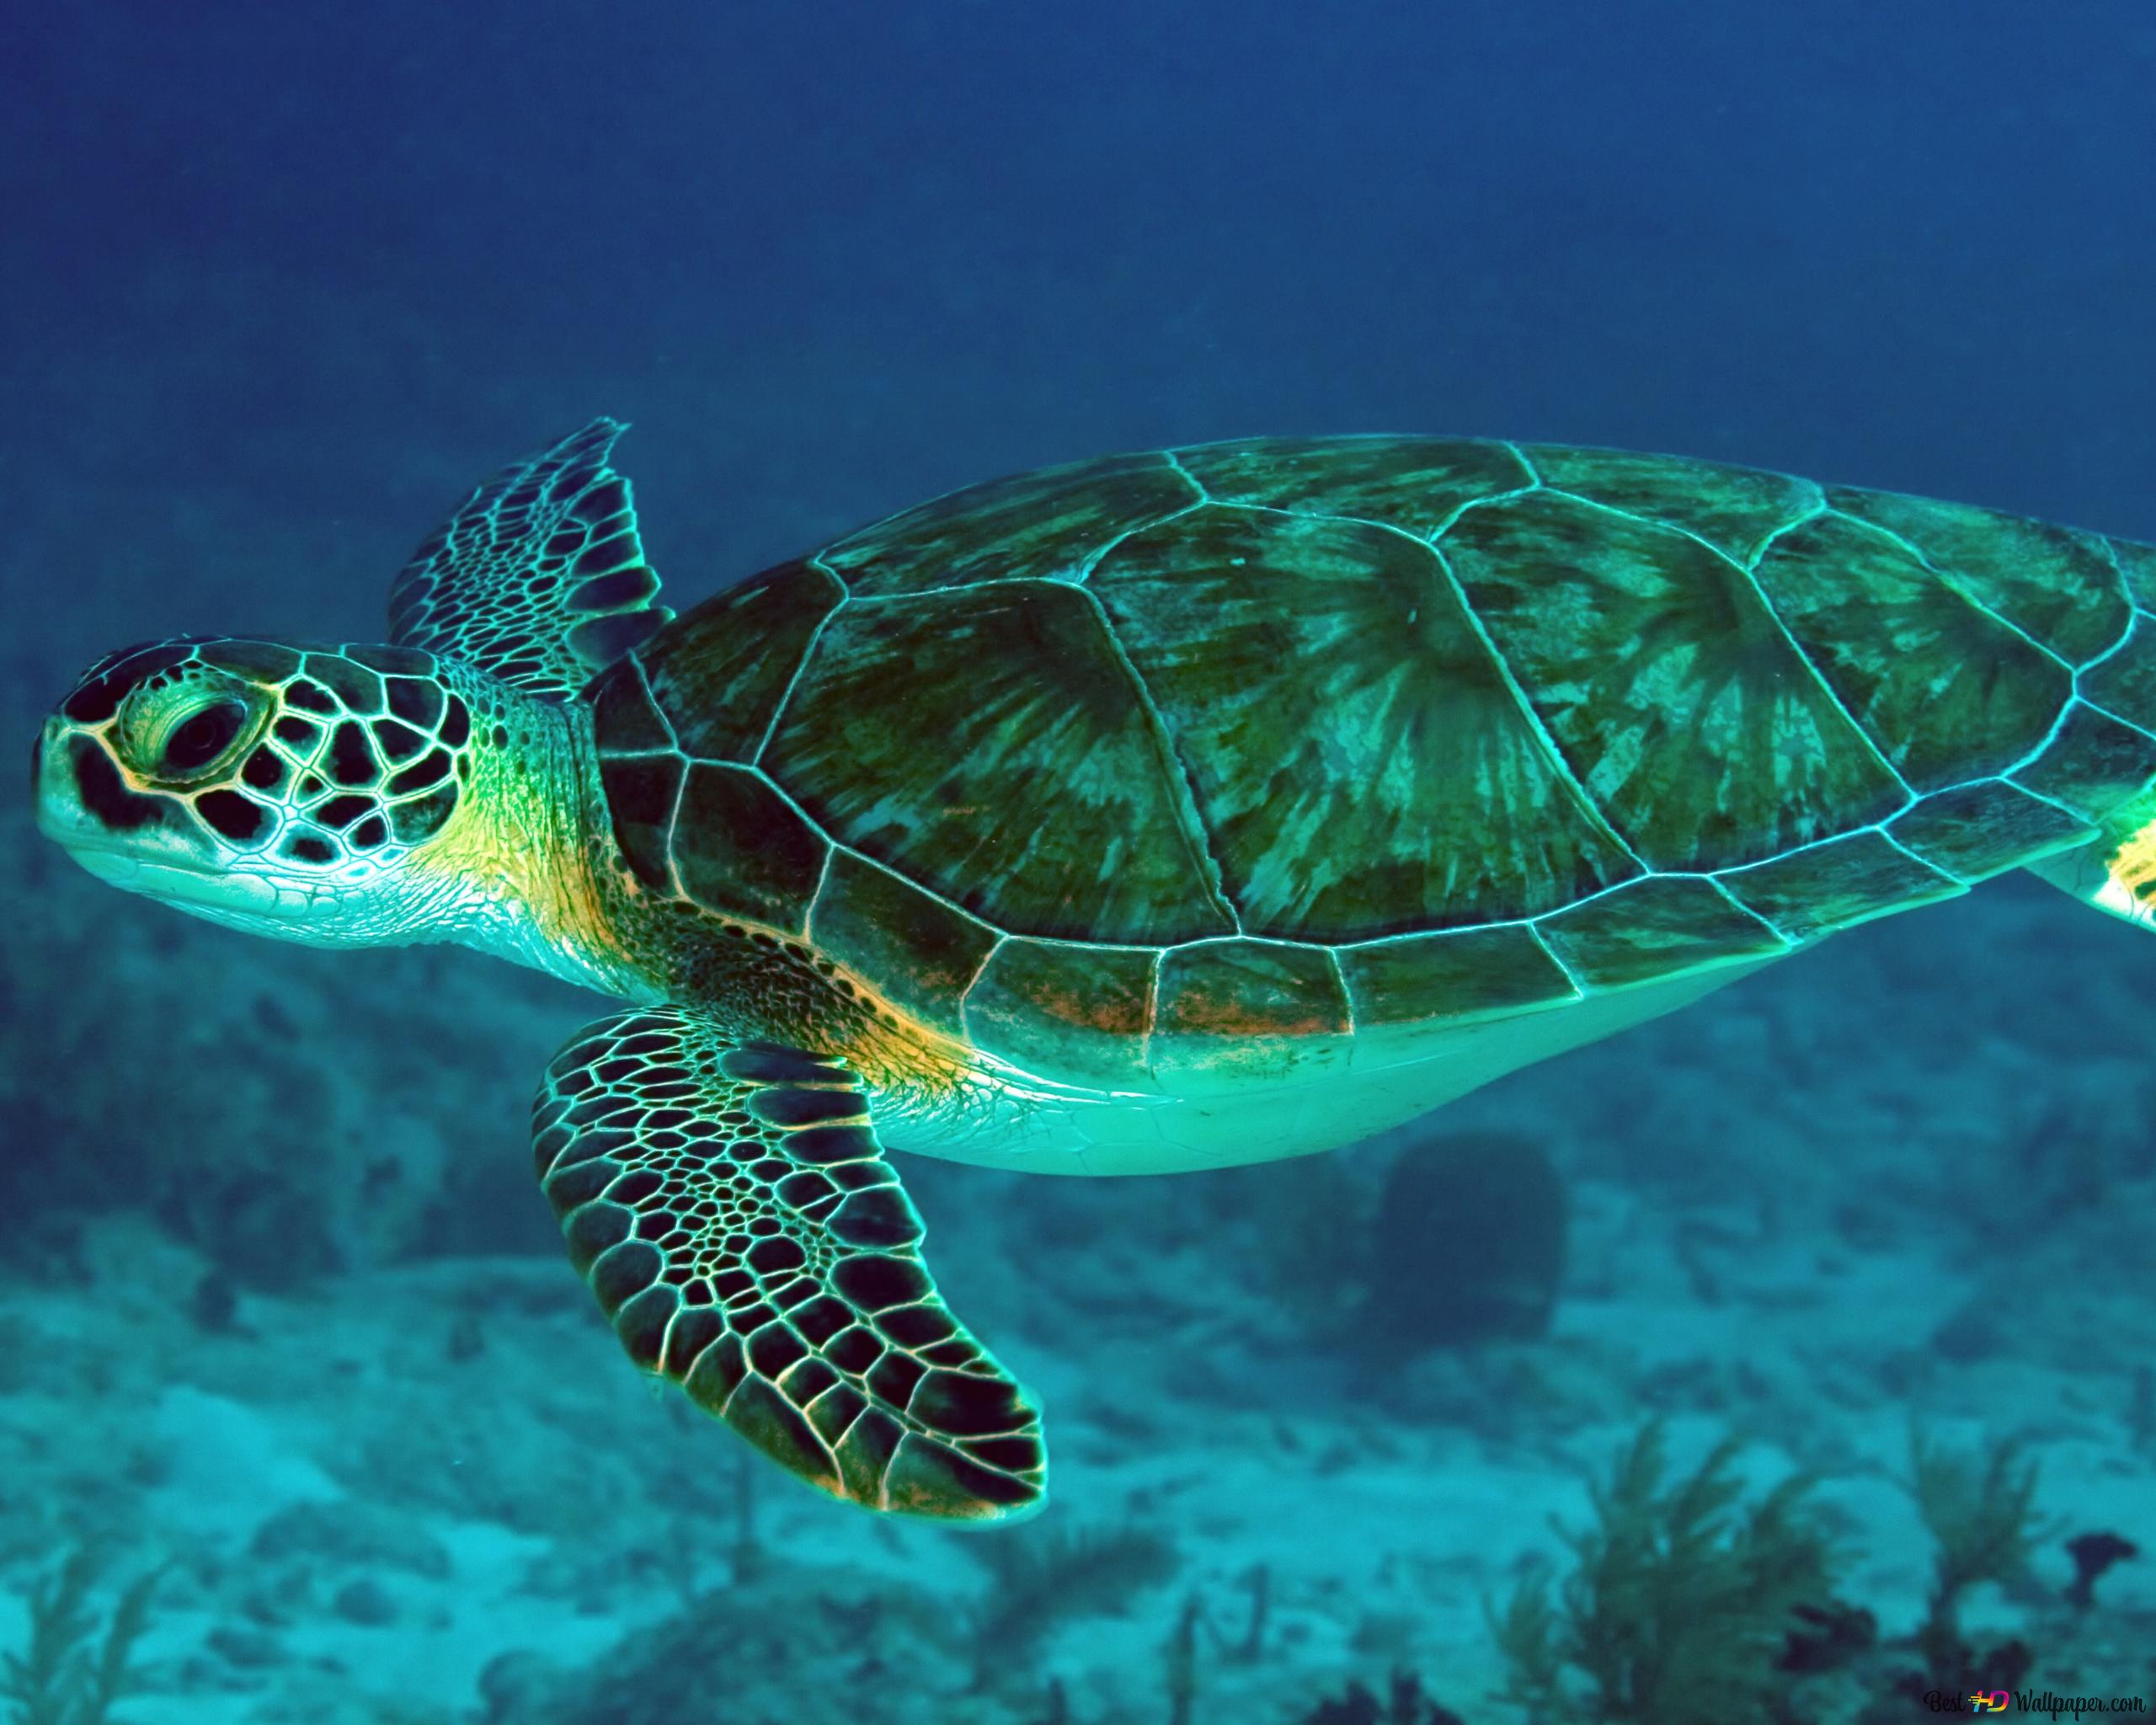 A green sea turtle swimming in the ocean - Turtle